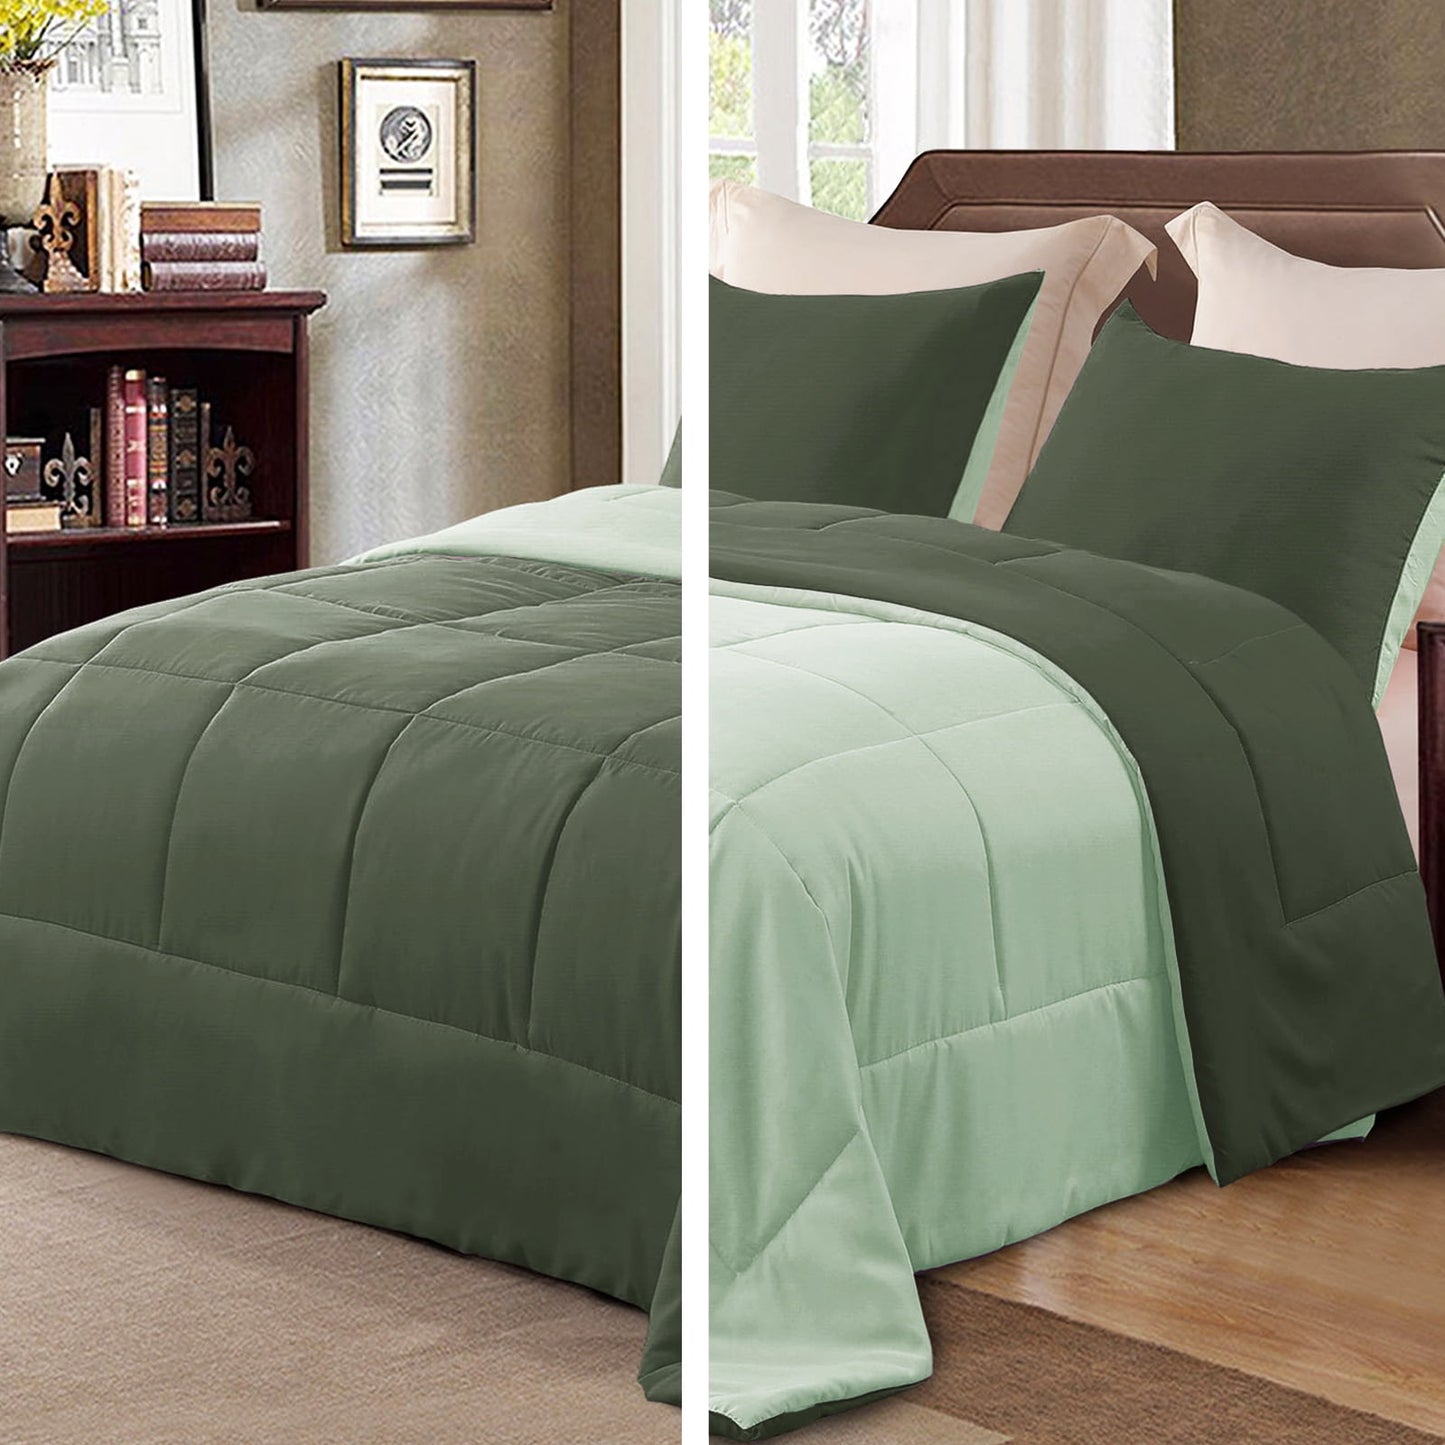 Exclusivo Mezcla Lightweight Reversible 3-Piece Comforter Set All Seasons, Down Alternative Comforter with 2 Pillow Shams, King Size, Emerald/Mint